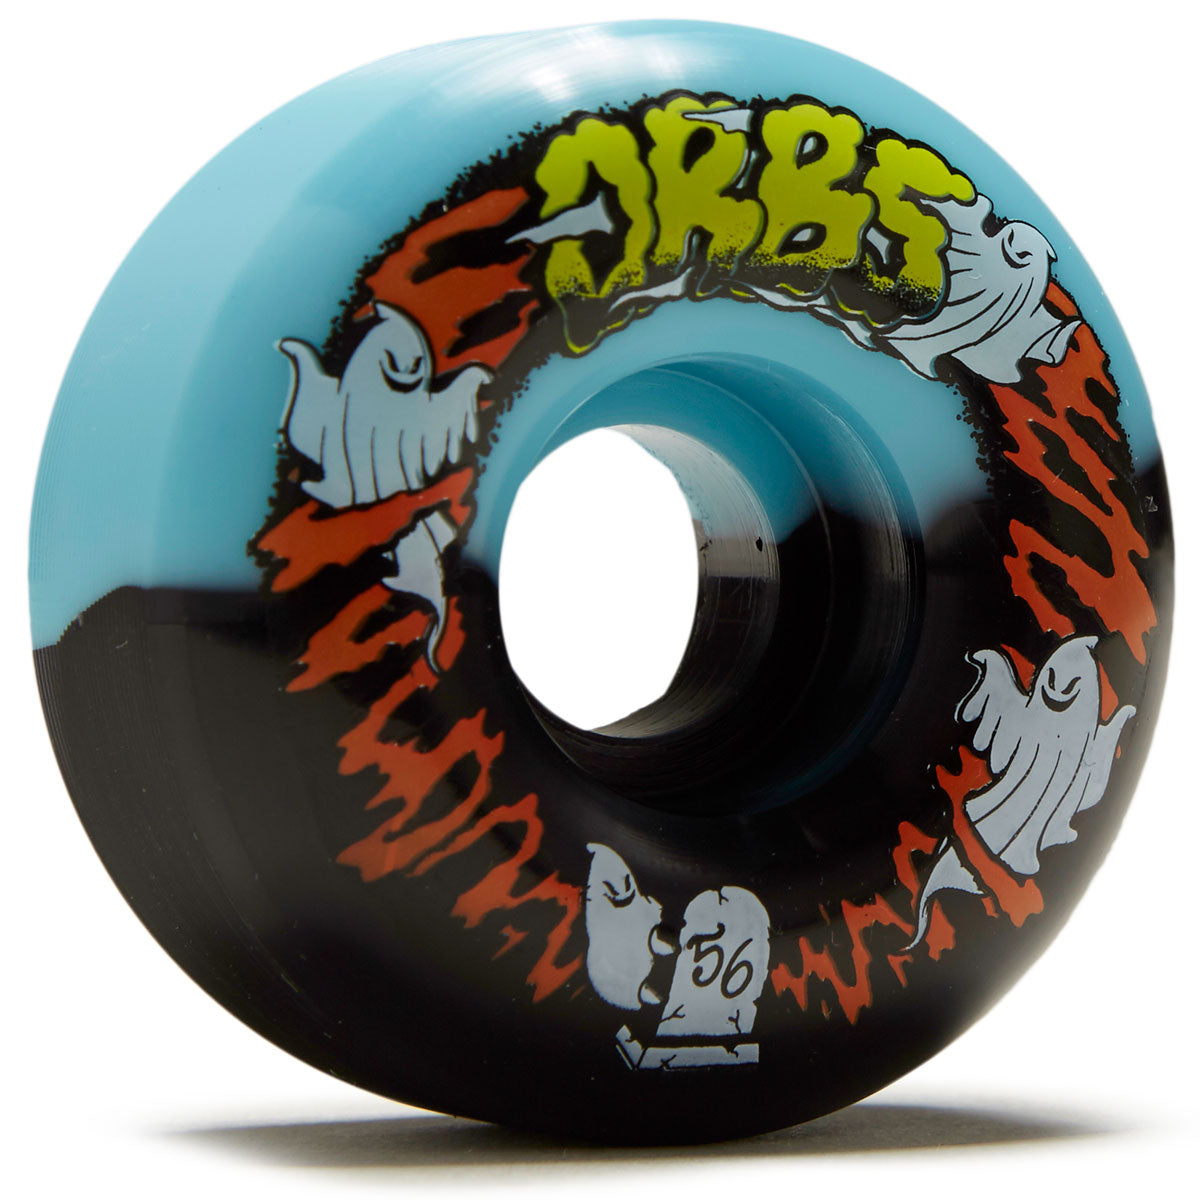 Welcome Orbs Apparitions Round 99a Skateboard Wheels - Black/Blue Splits - 56mm image 1